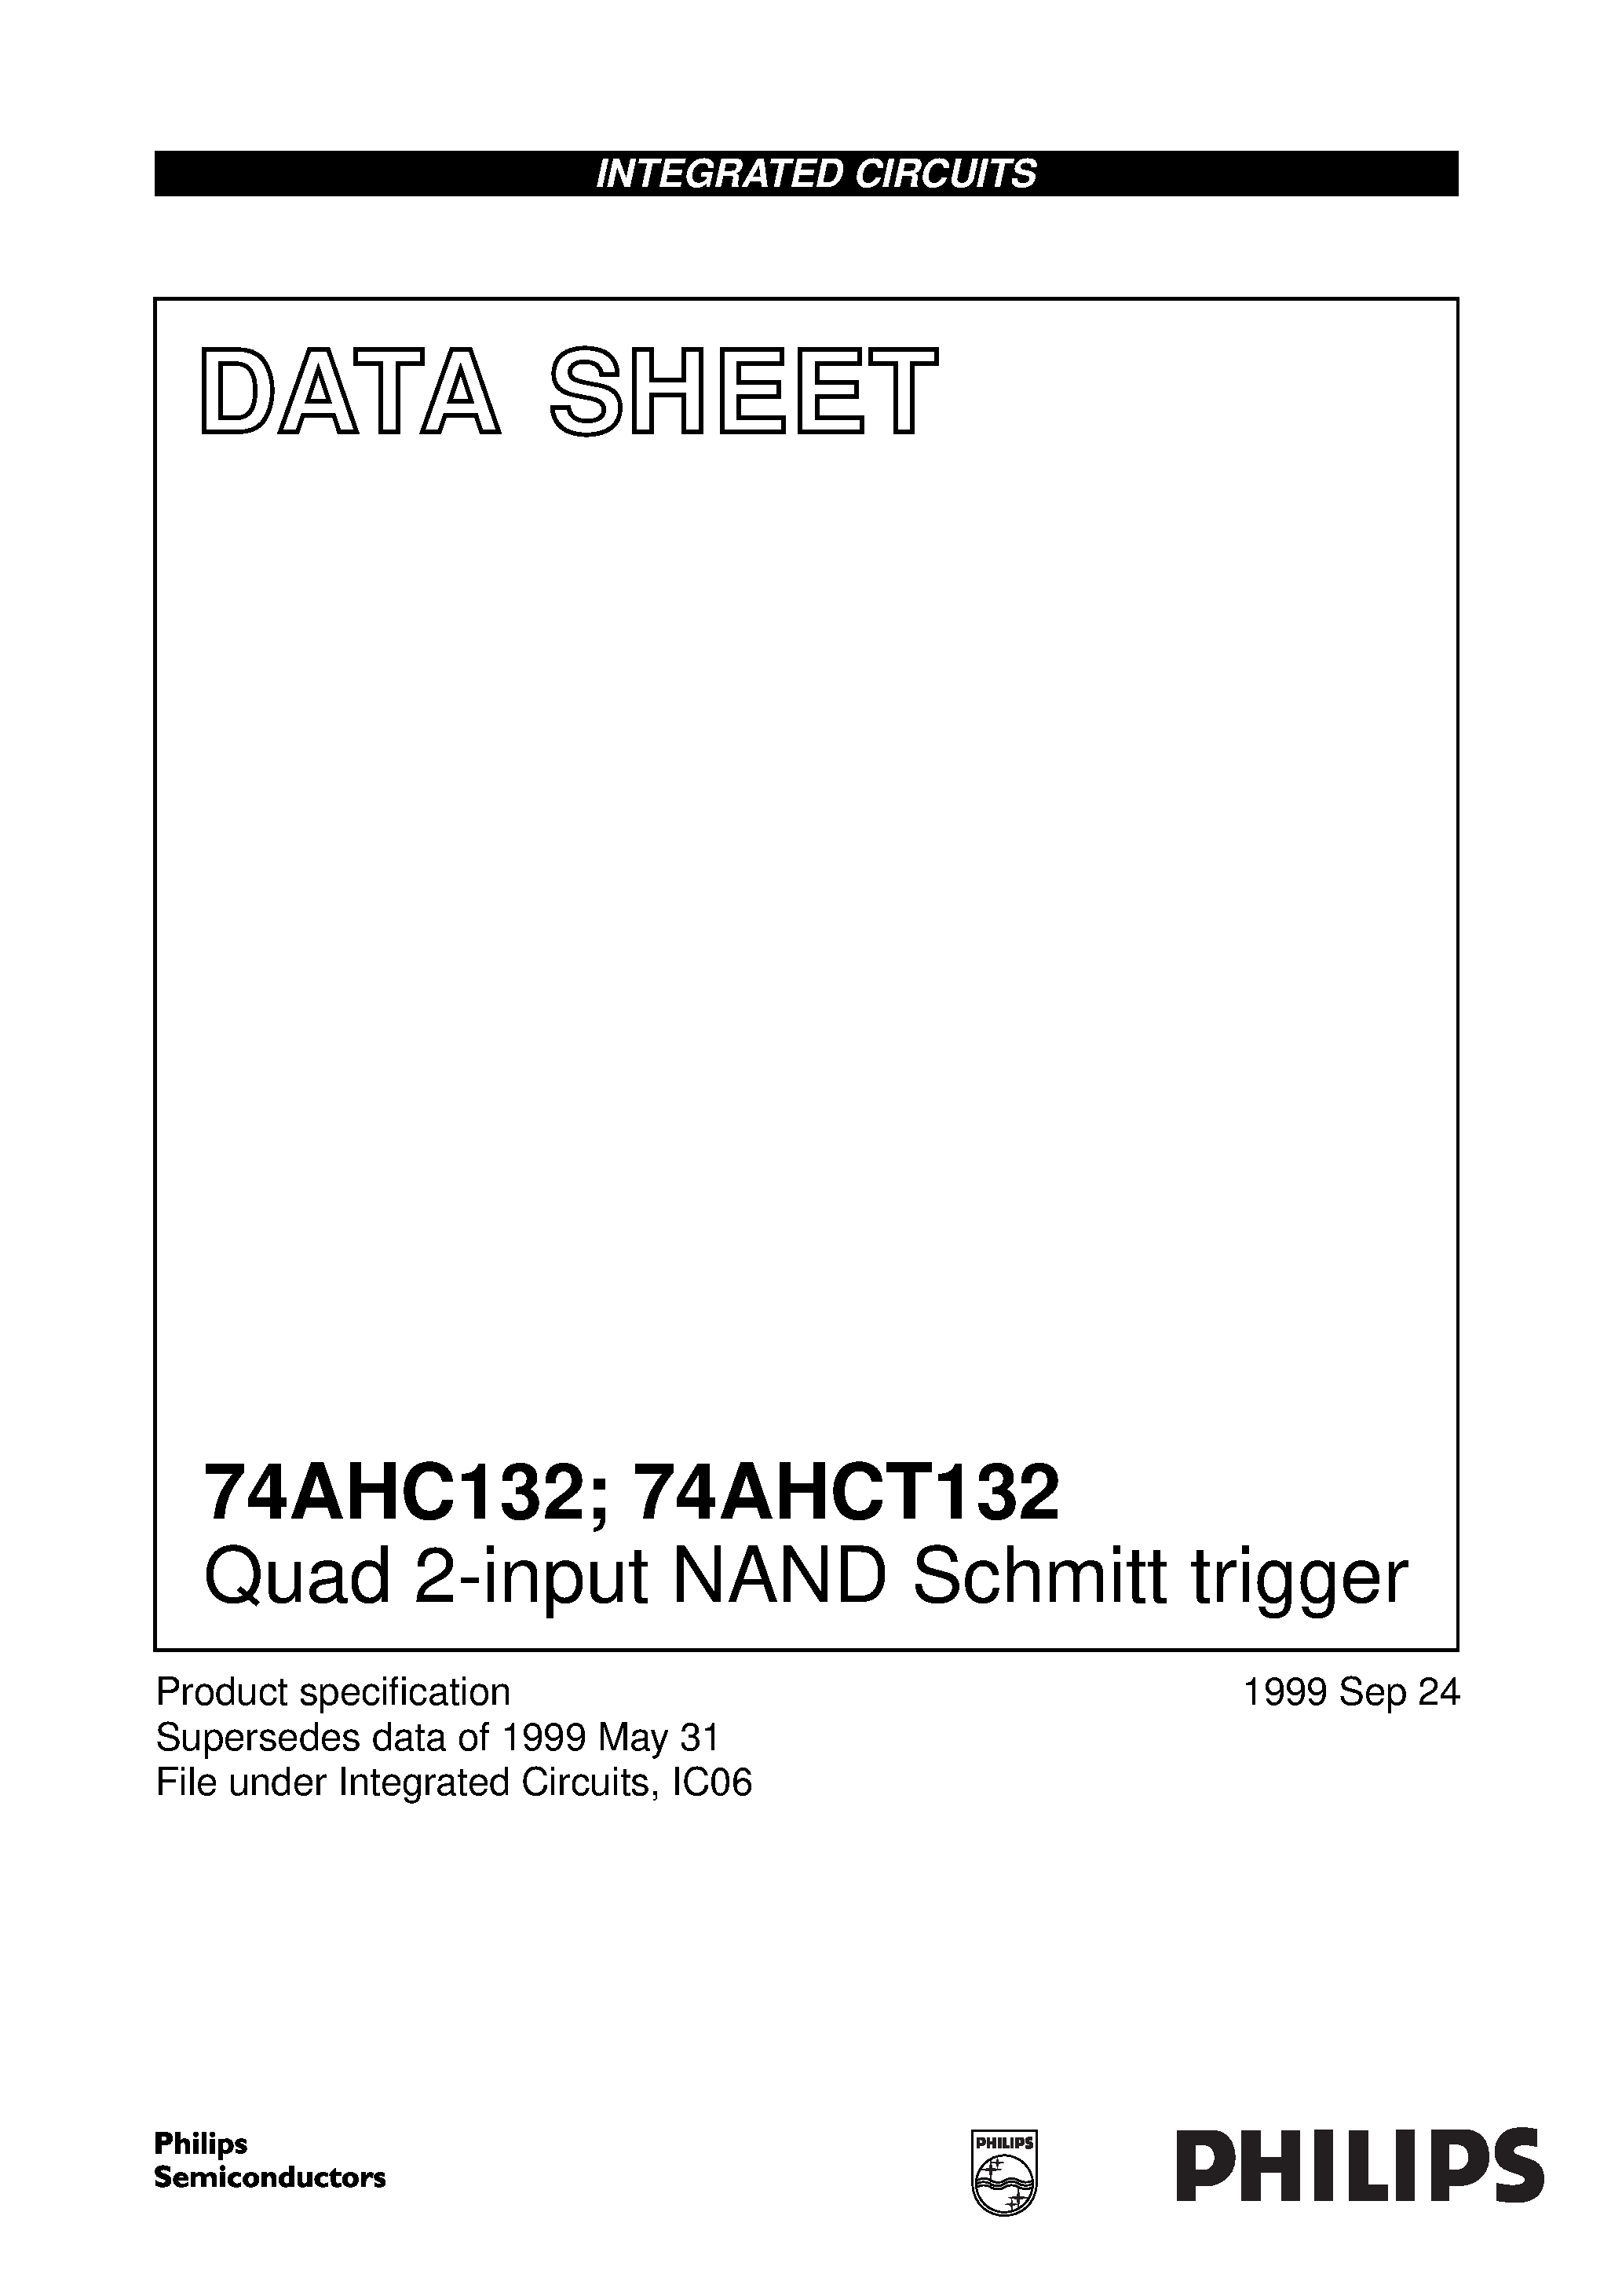 Даташит 74AHC132 - Quad 2-input NAND Schmitt trigger страница 1